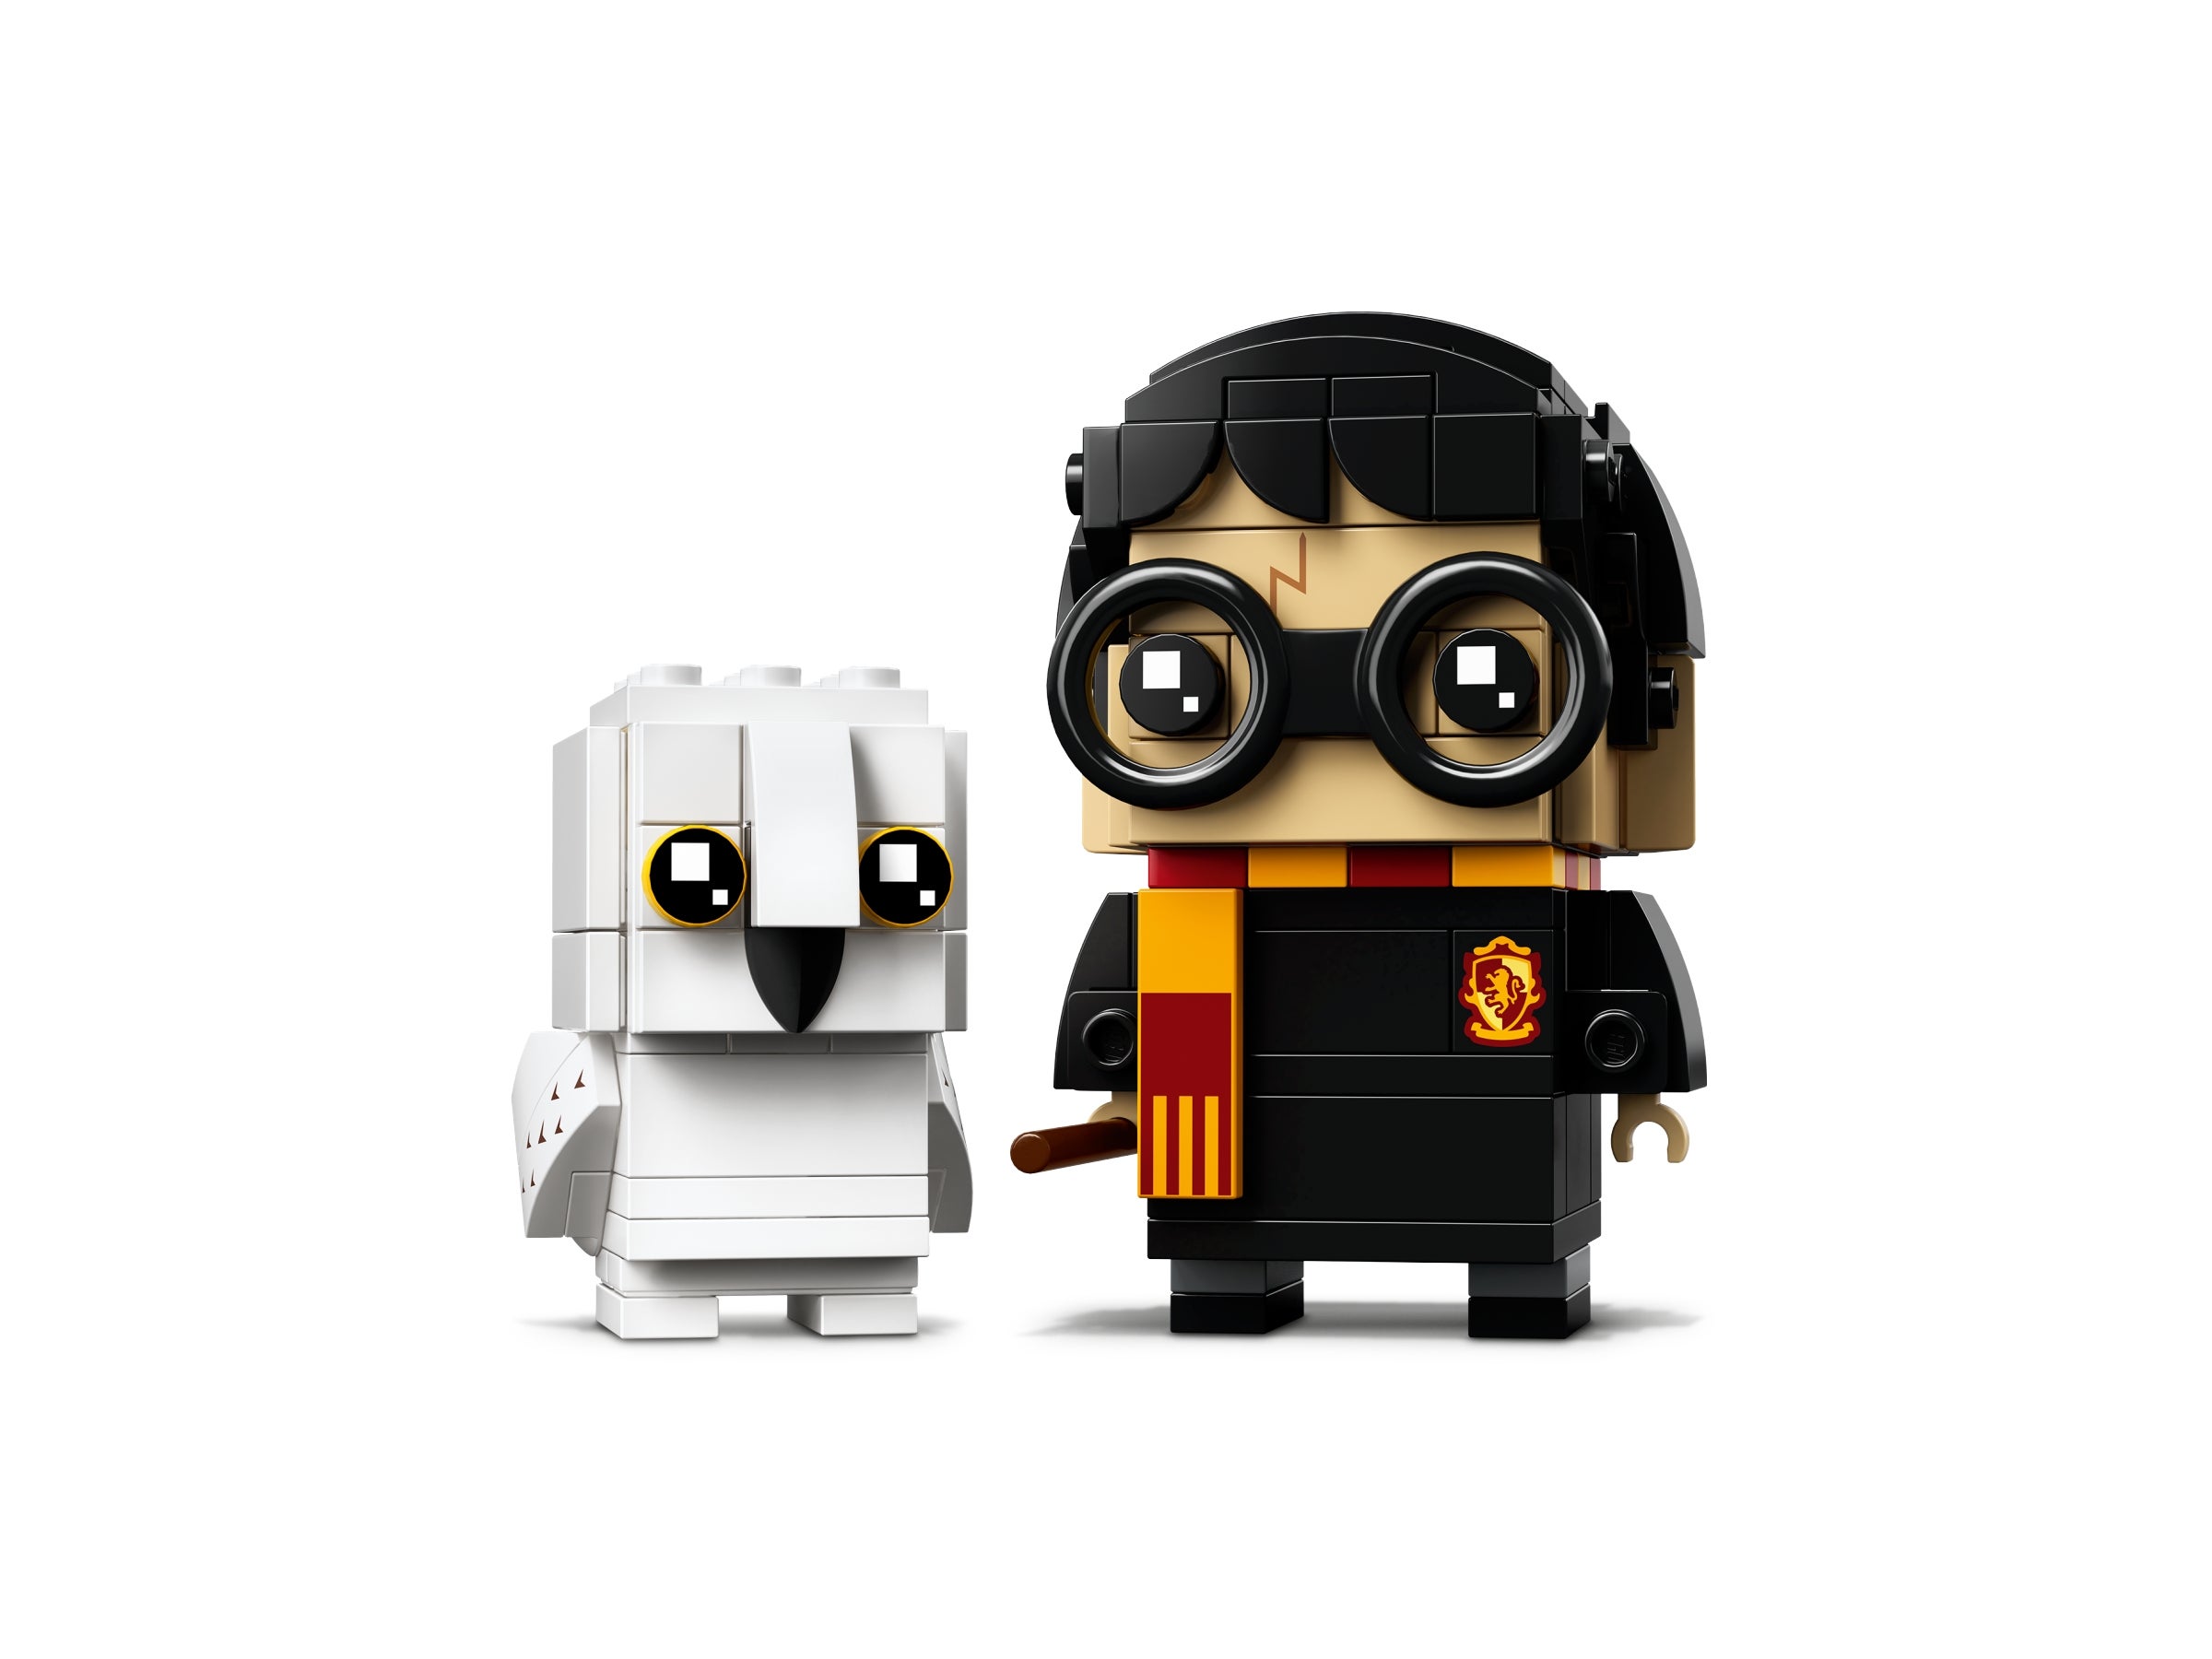 Lego 41615 Brickheadz Harry Potter & Hedwig Figurine for sale online